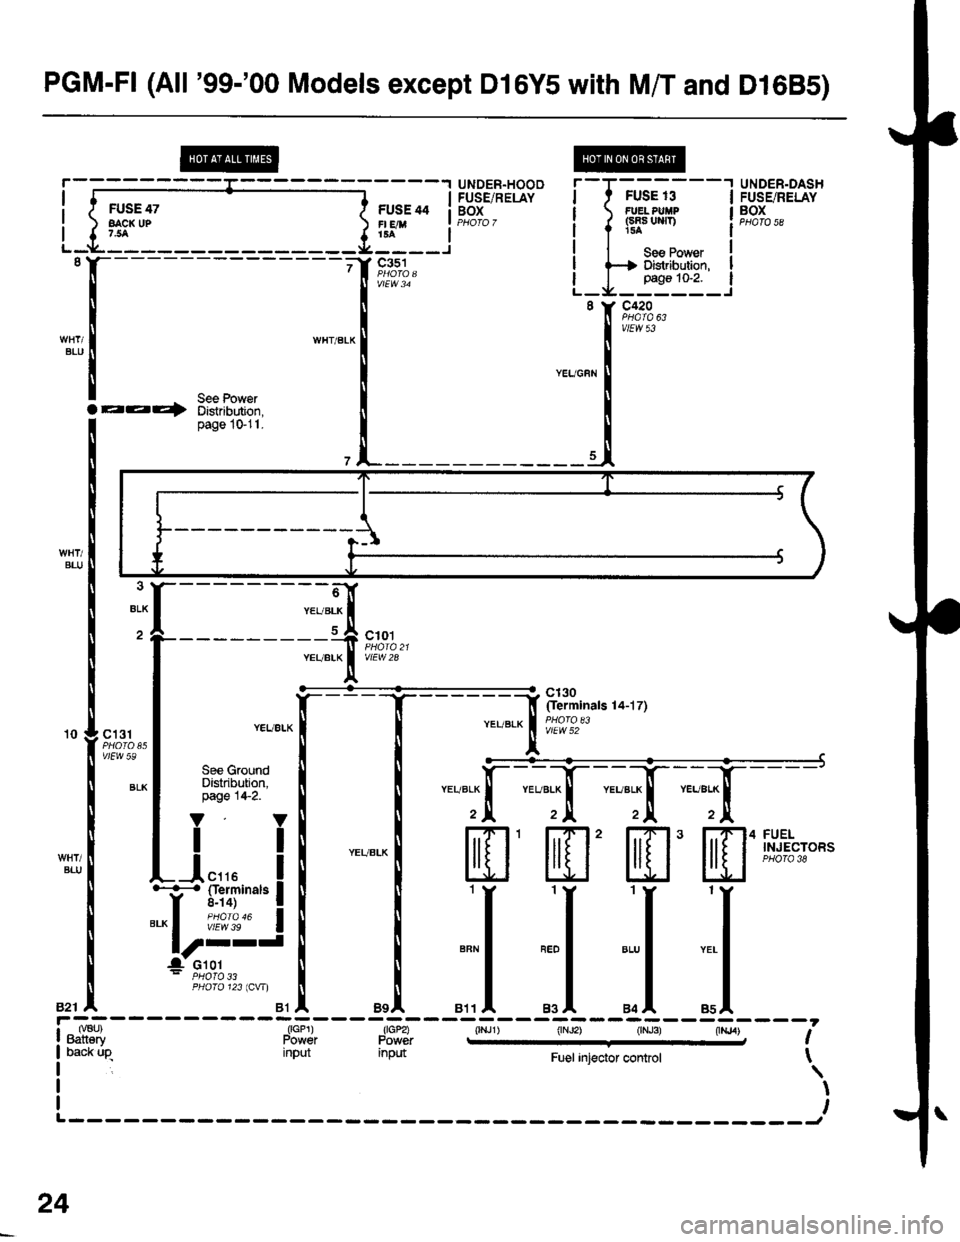 HONDA CIVIC 1996 6.G Repair Manual PGM-FI (All 99-00 Models except Dl6Y5 with M/T and Dt685)
@r-T-------r UNDER.DASHI t FUSE ro IFUSE/RELAYI  FUEL PUMP I BOX
i { {"rl"t* i PHarc 58
! | see Power II H Distribution. I
I I page 1o-2. IL